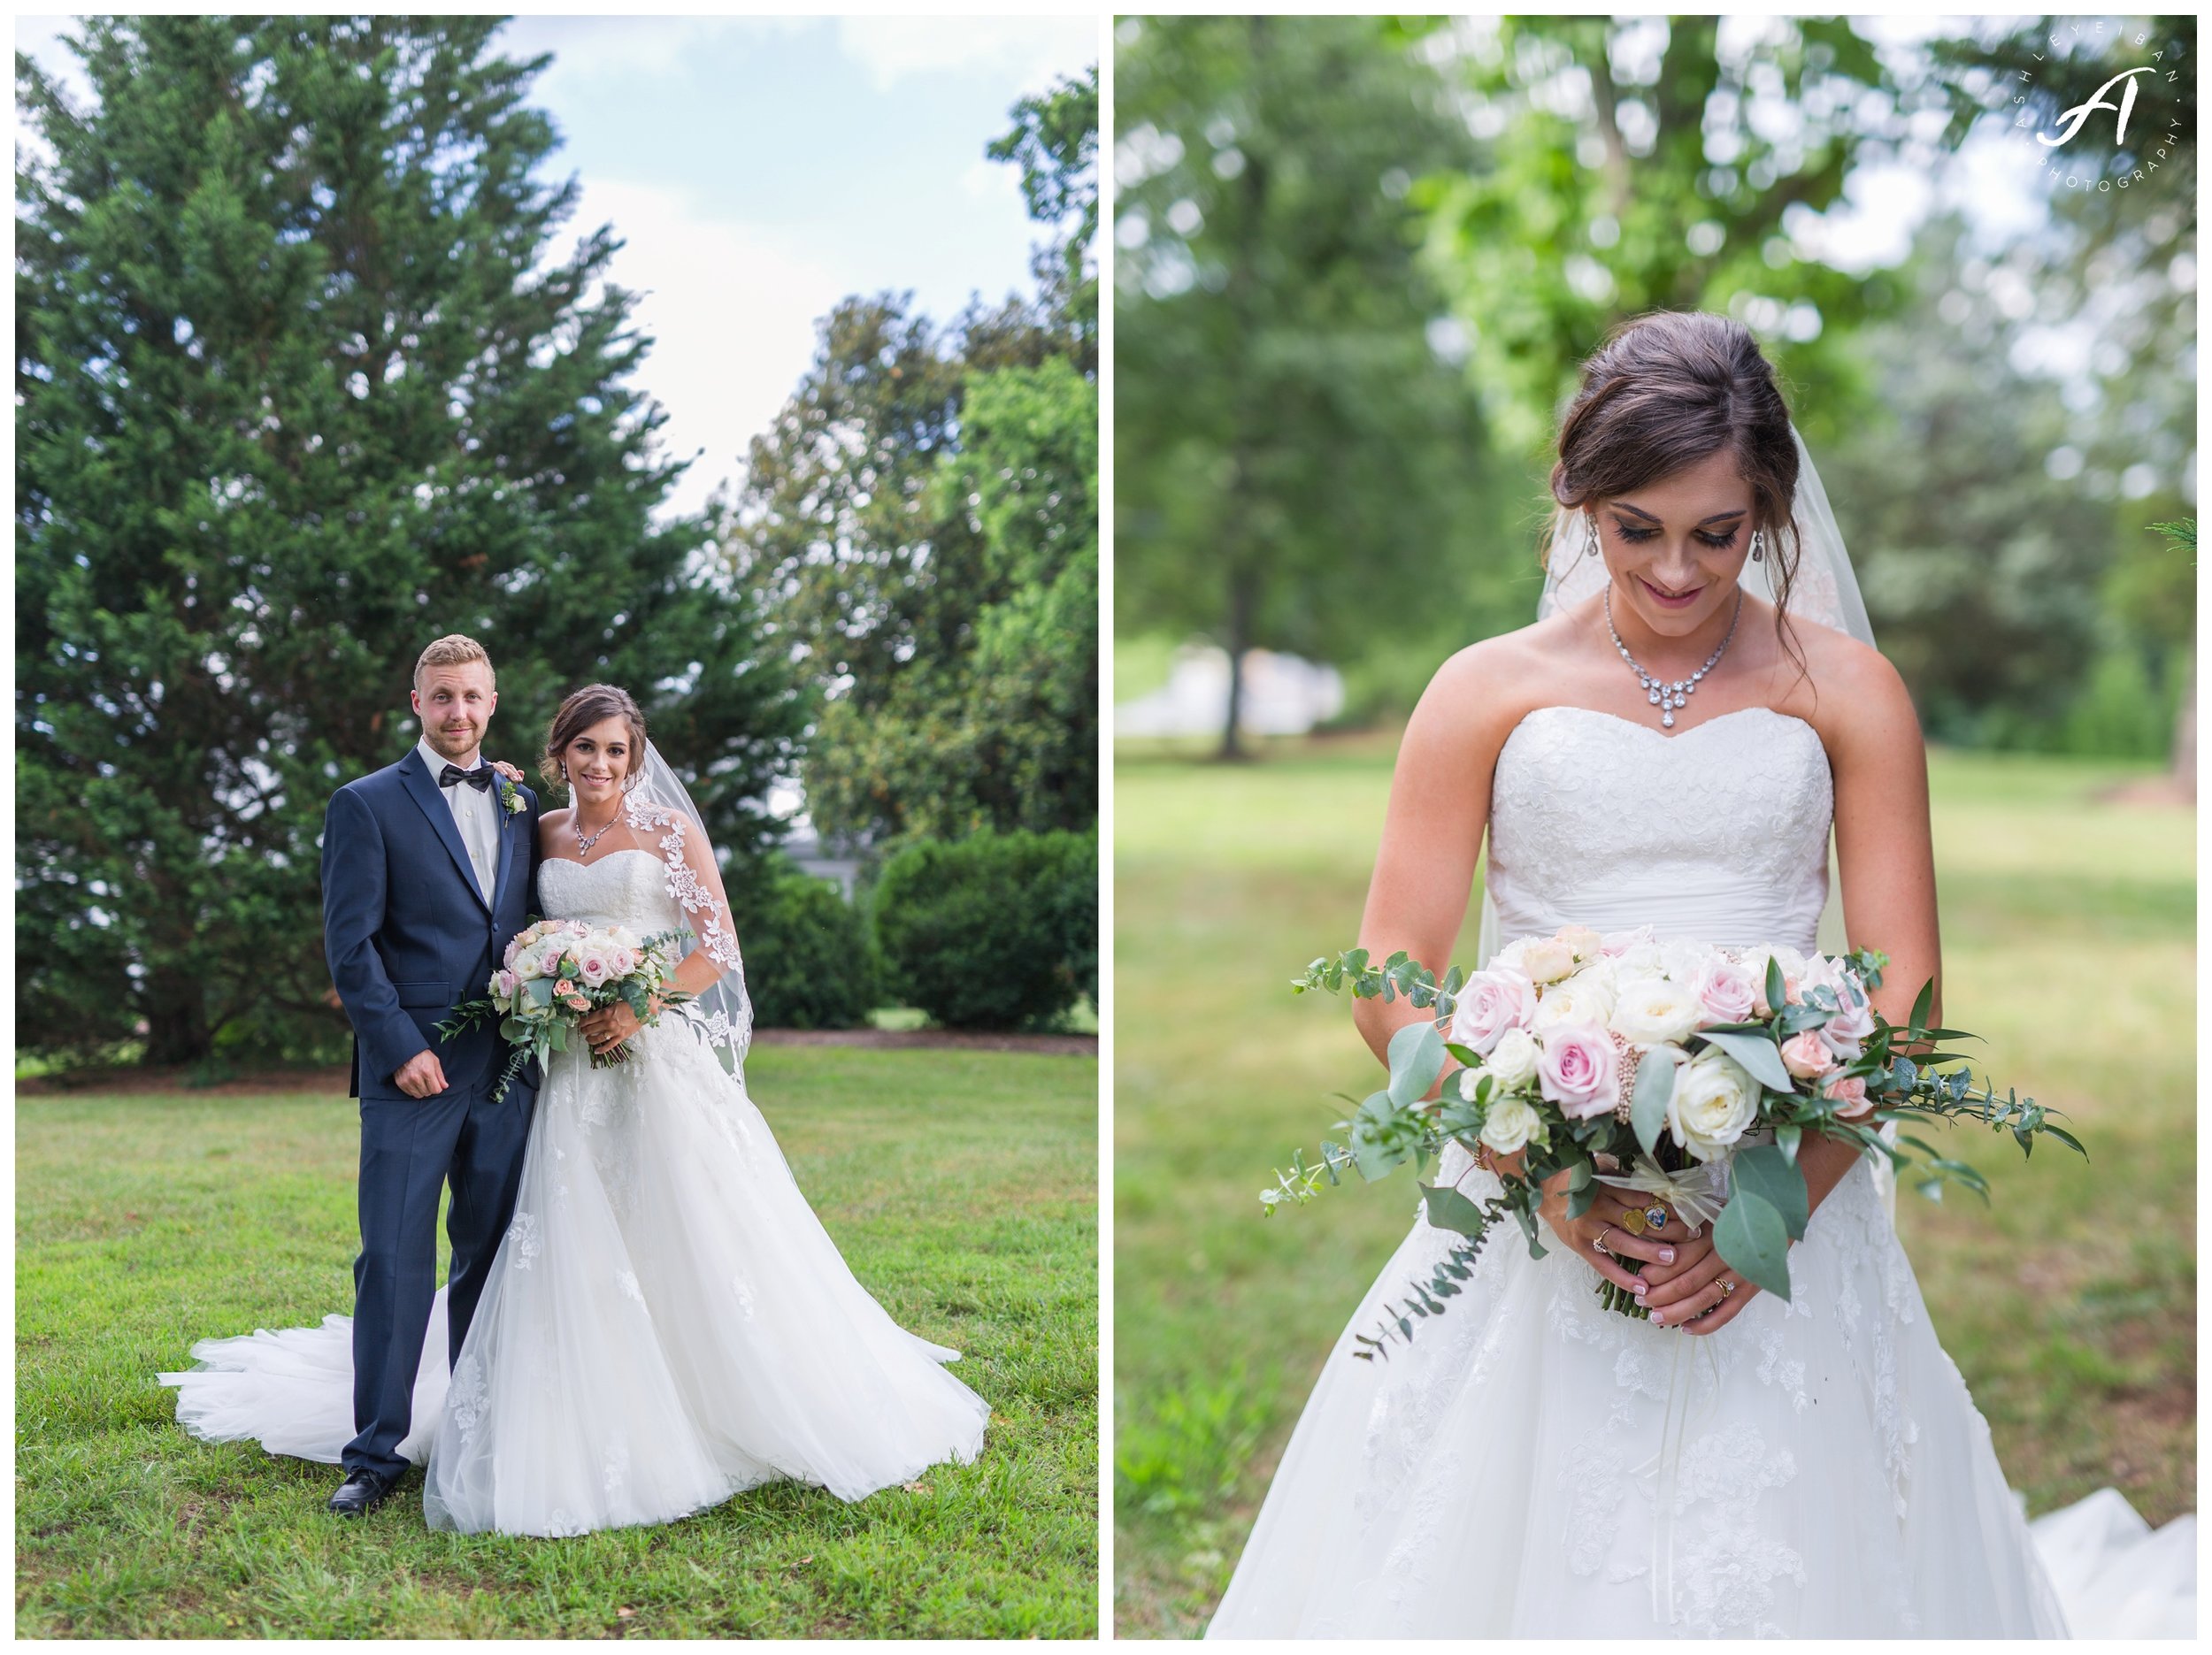 Charlottesville and Lynchburg Wedding Photography at The Trivium Estate || www.ashleyeiban.com